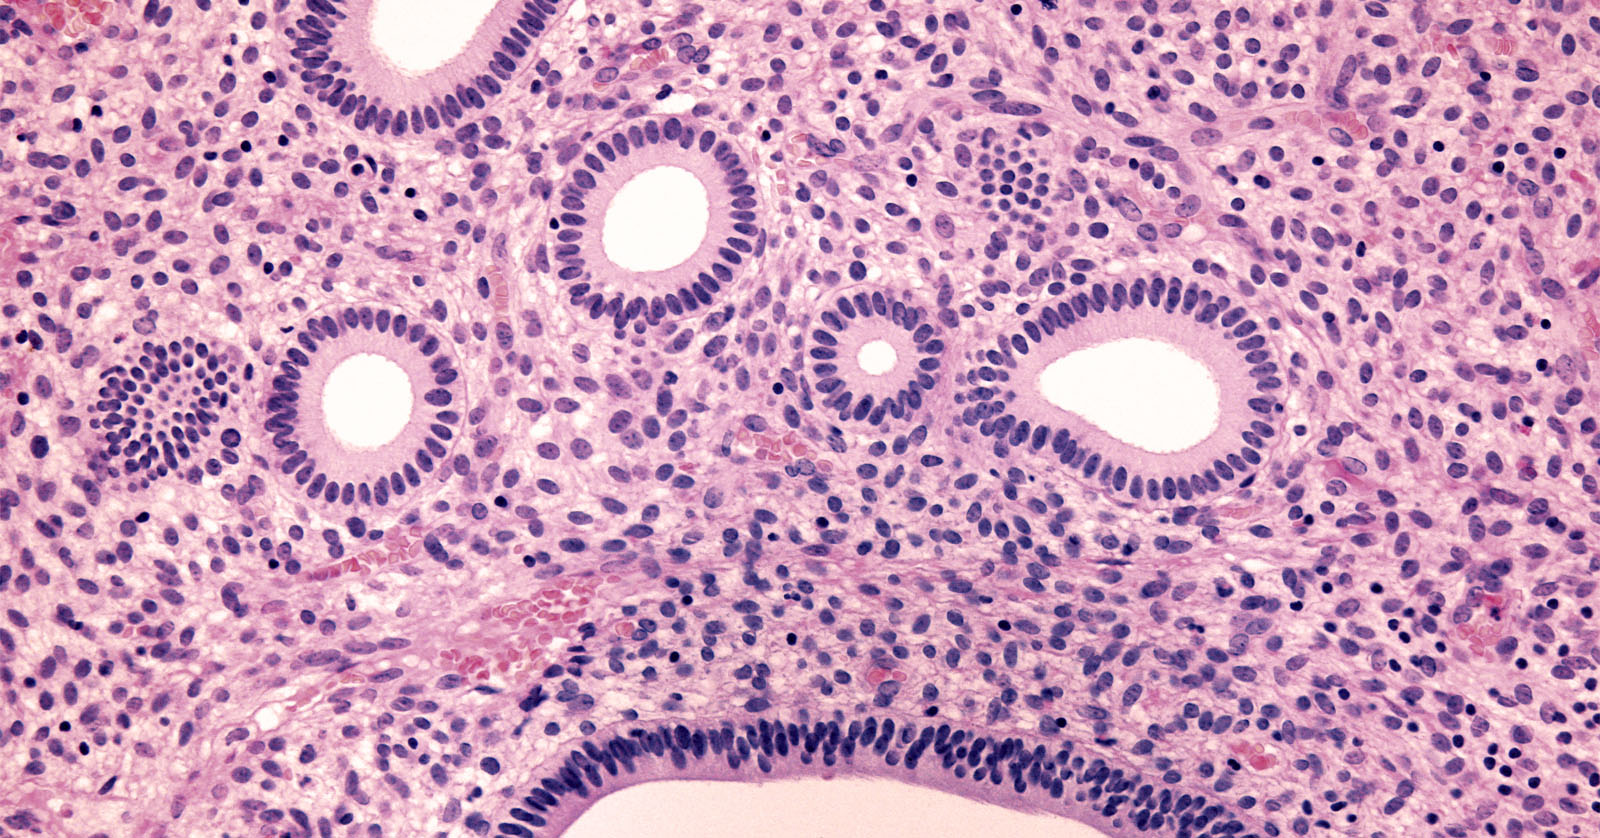 Cross-section of endometrial tissue.